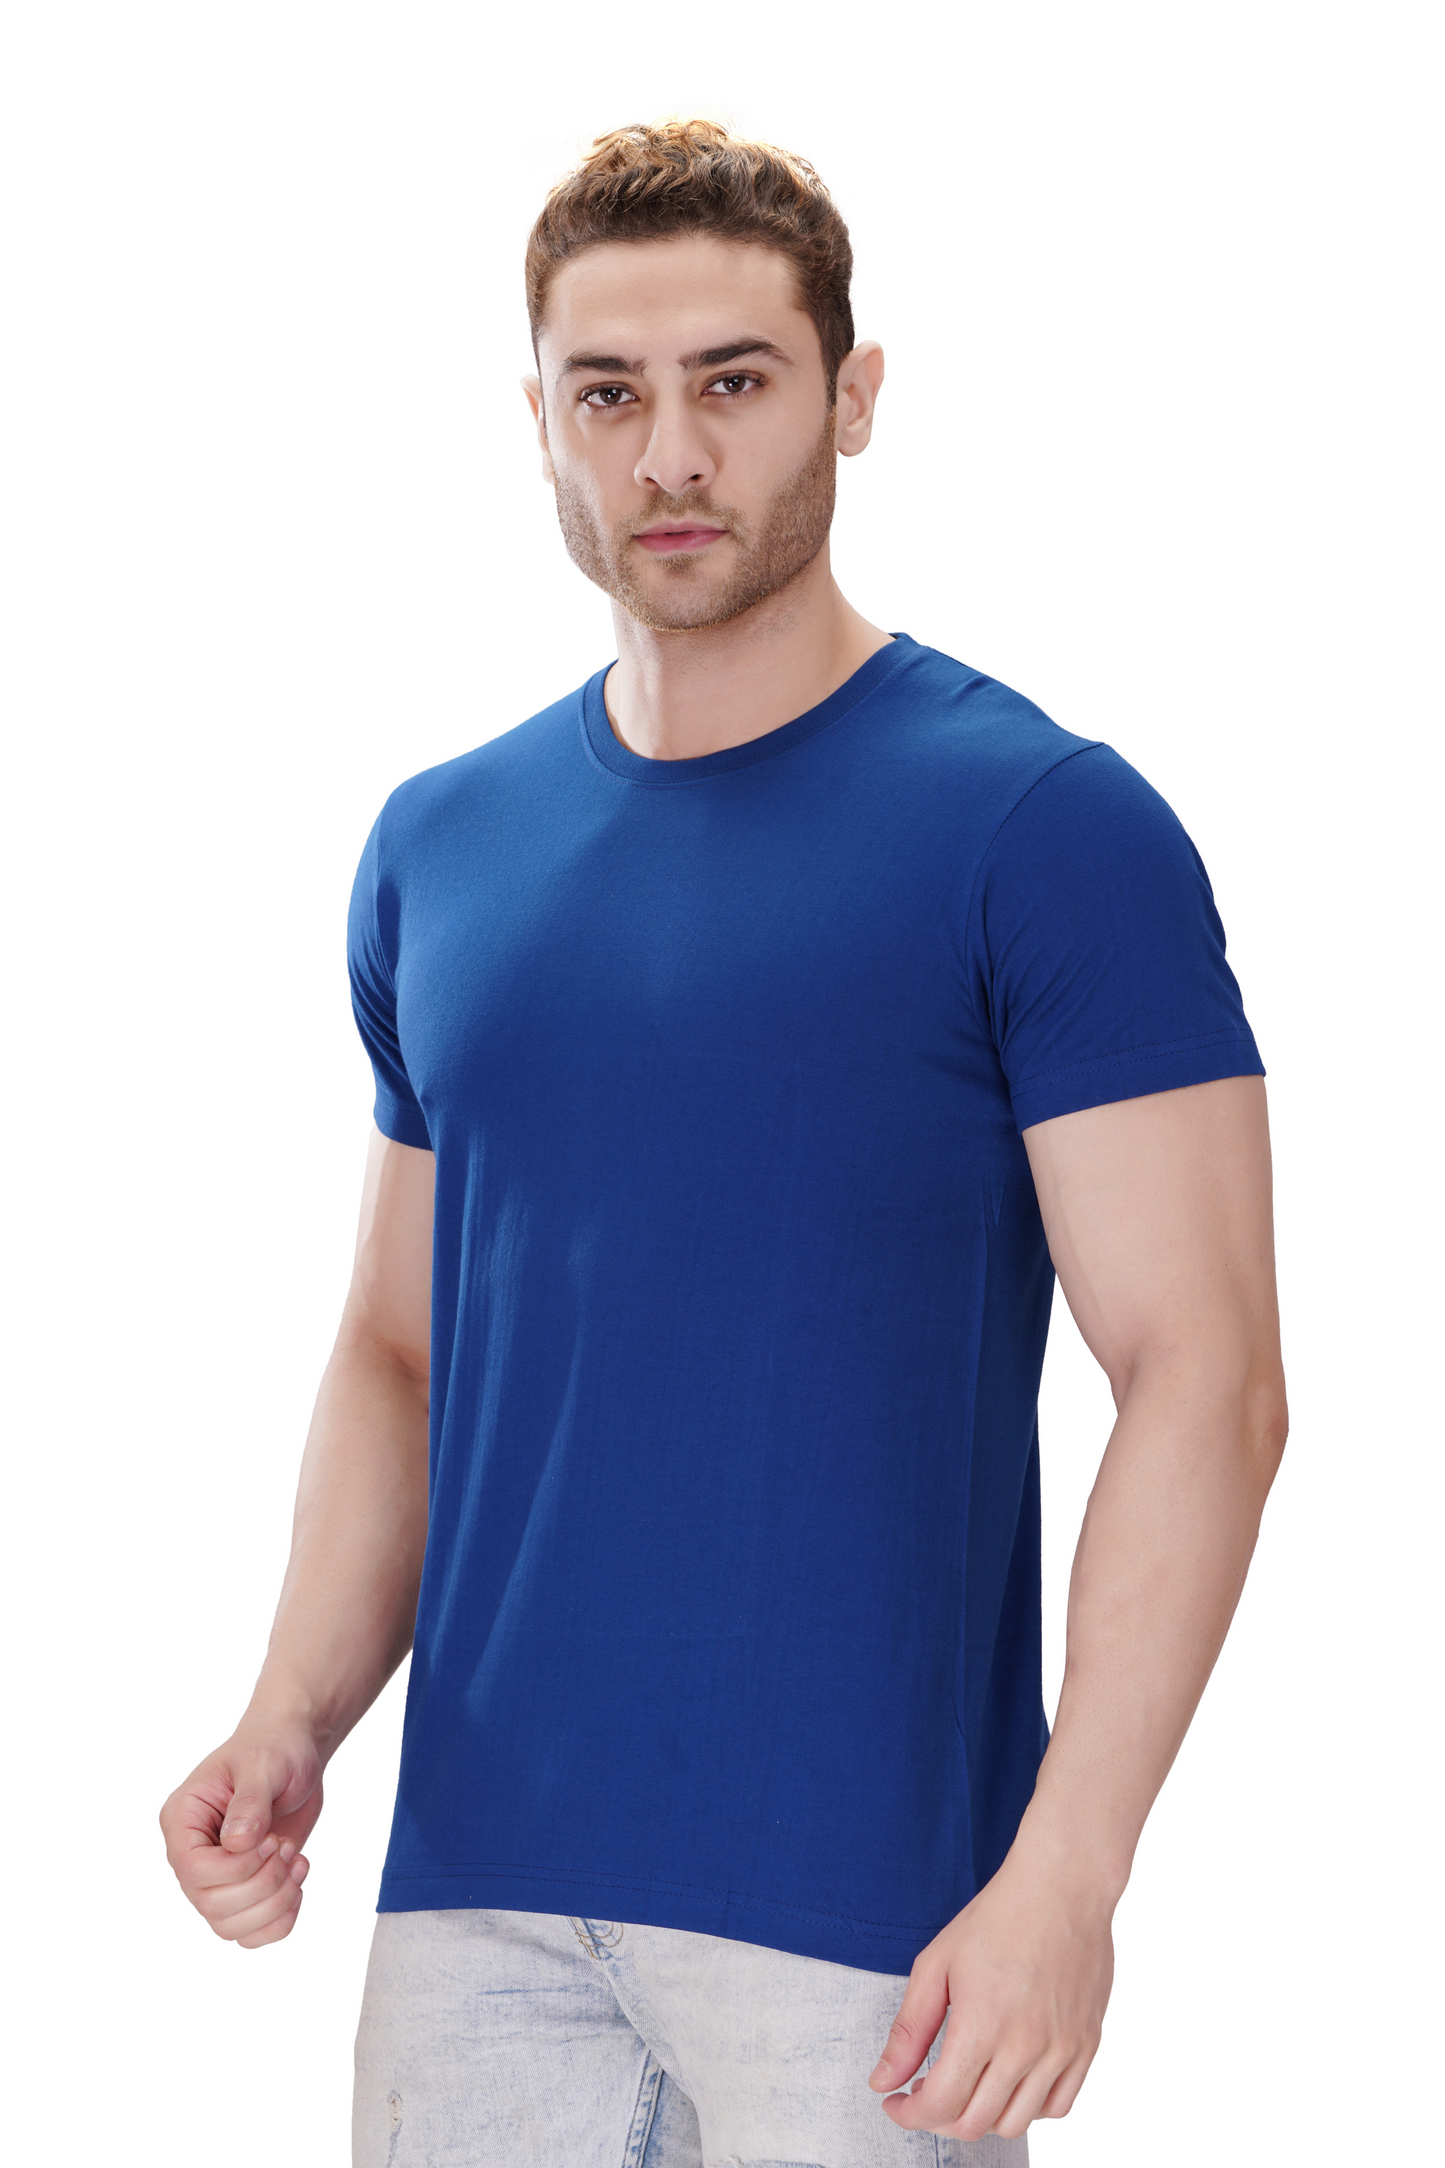 100% Cotton Men’s Half Sleeve T-Shirt - Royal Blue